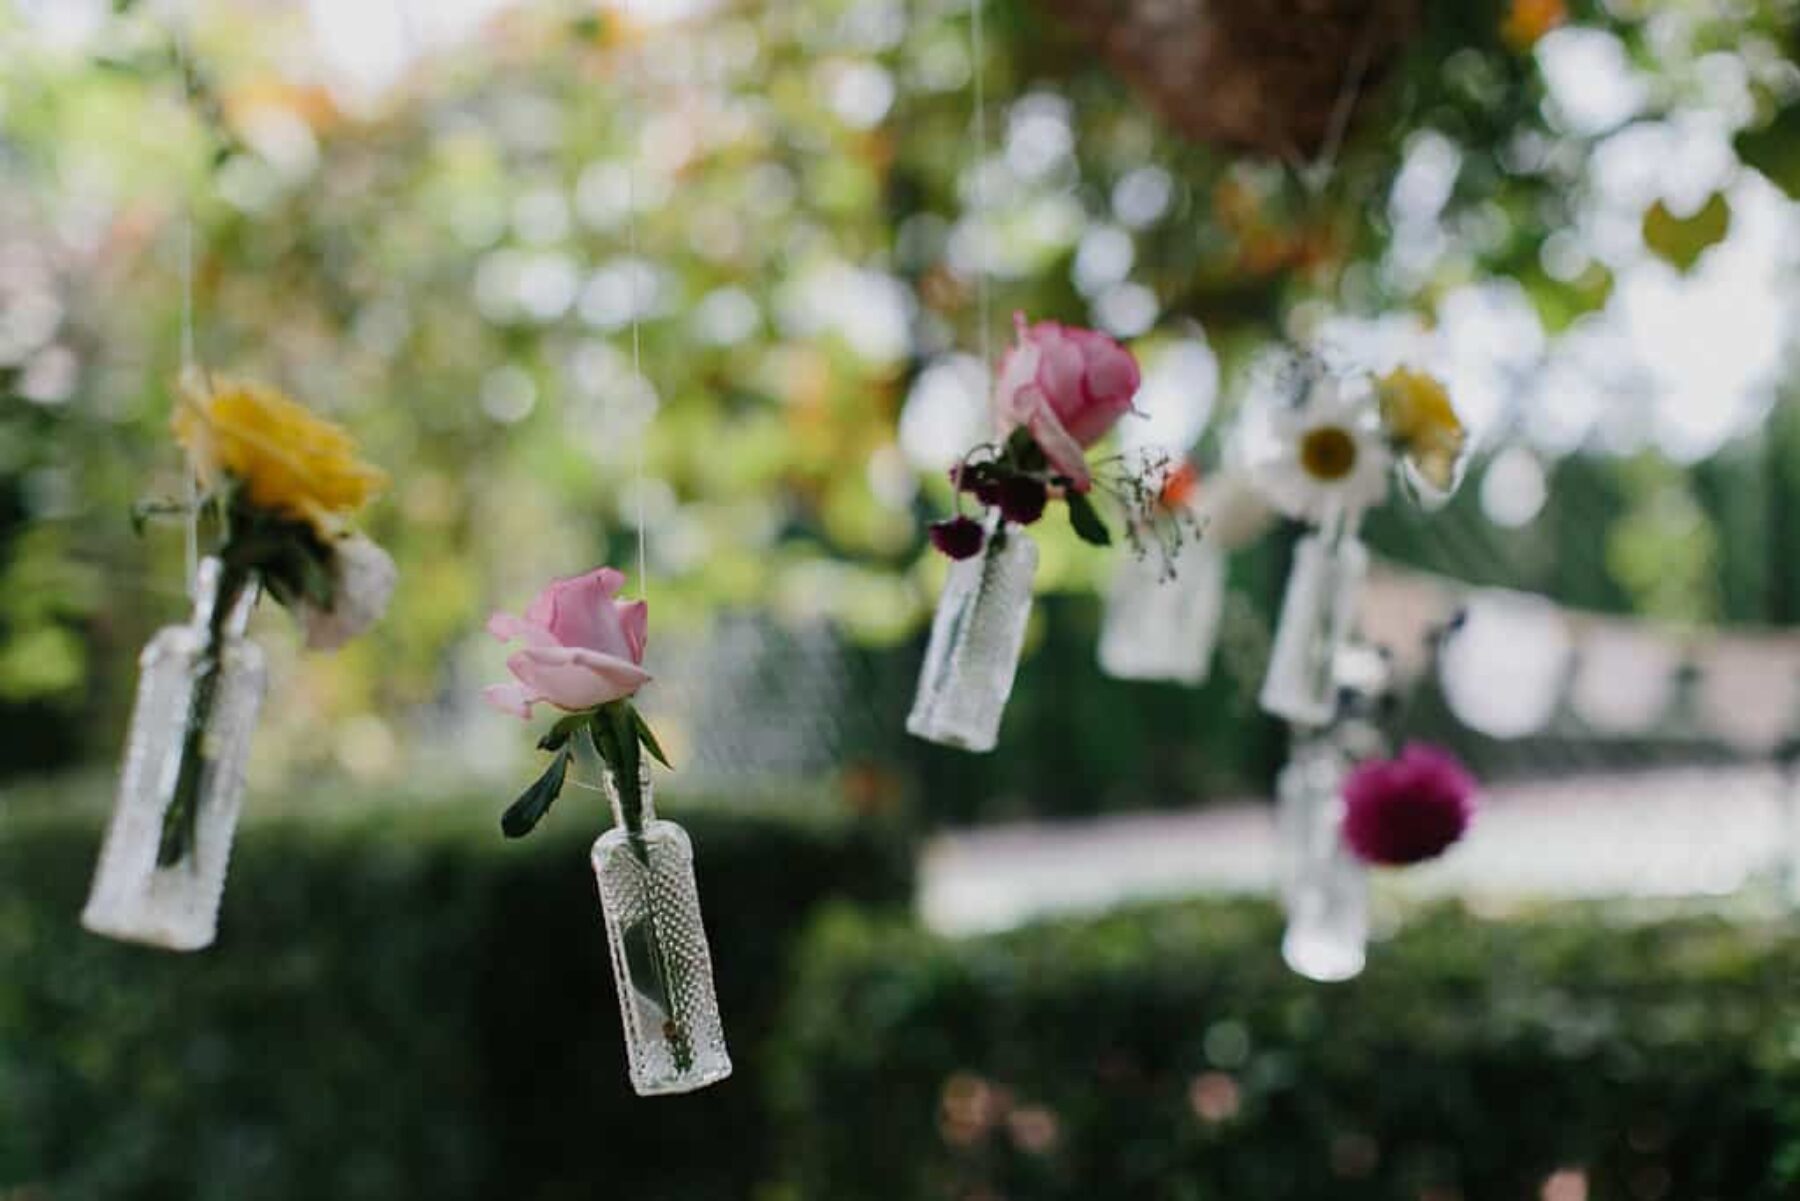 hanging flowers in bottles